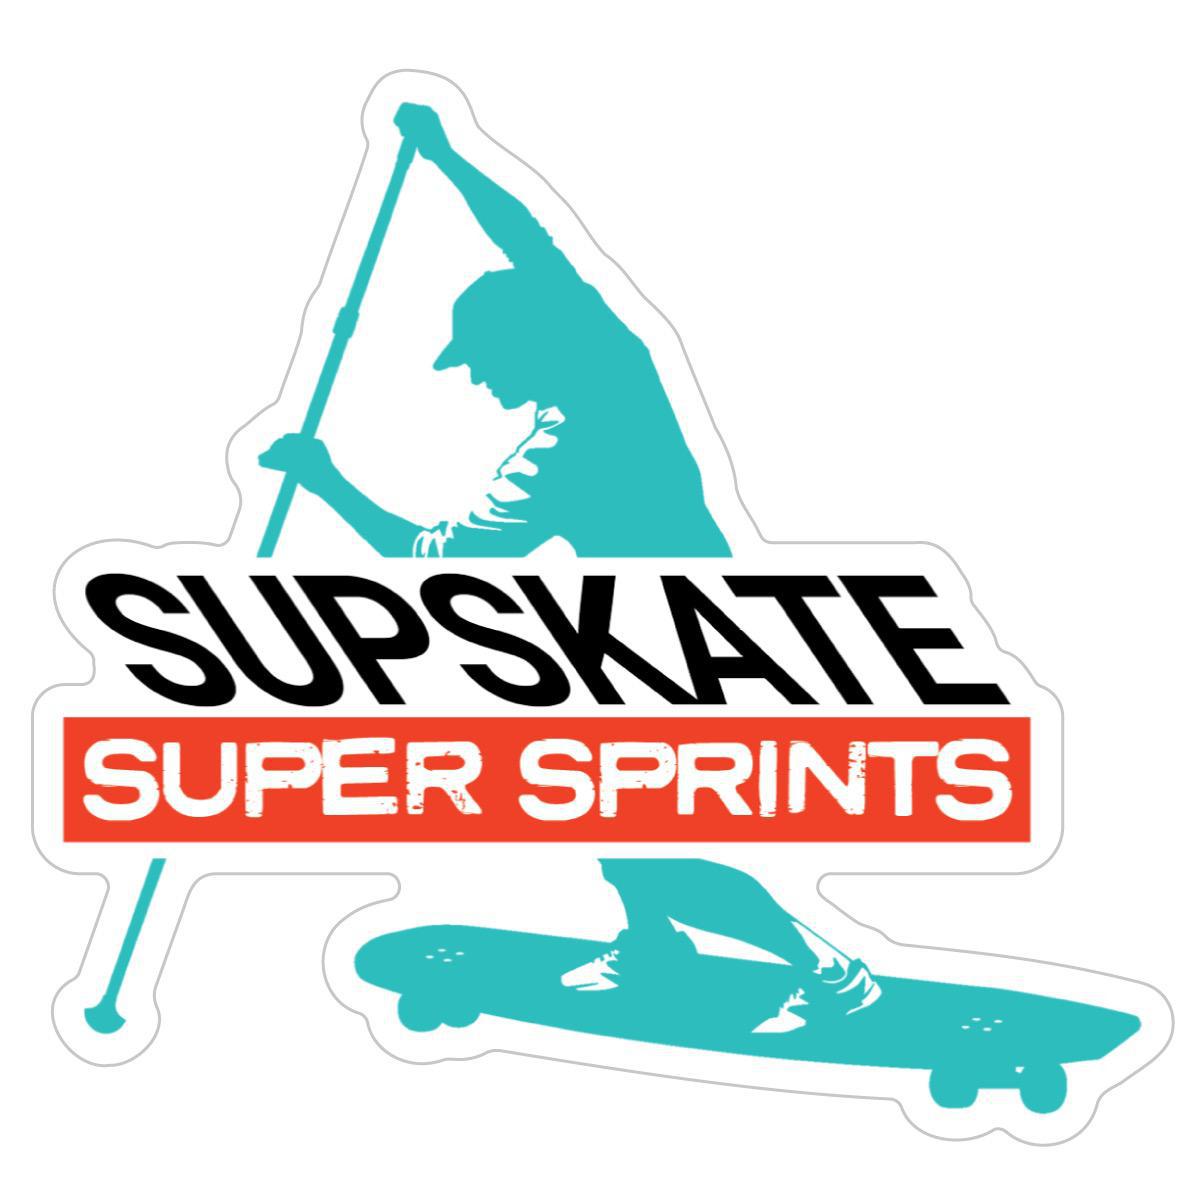 Official Super Sprints event sticker